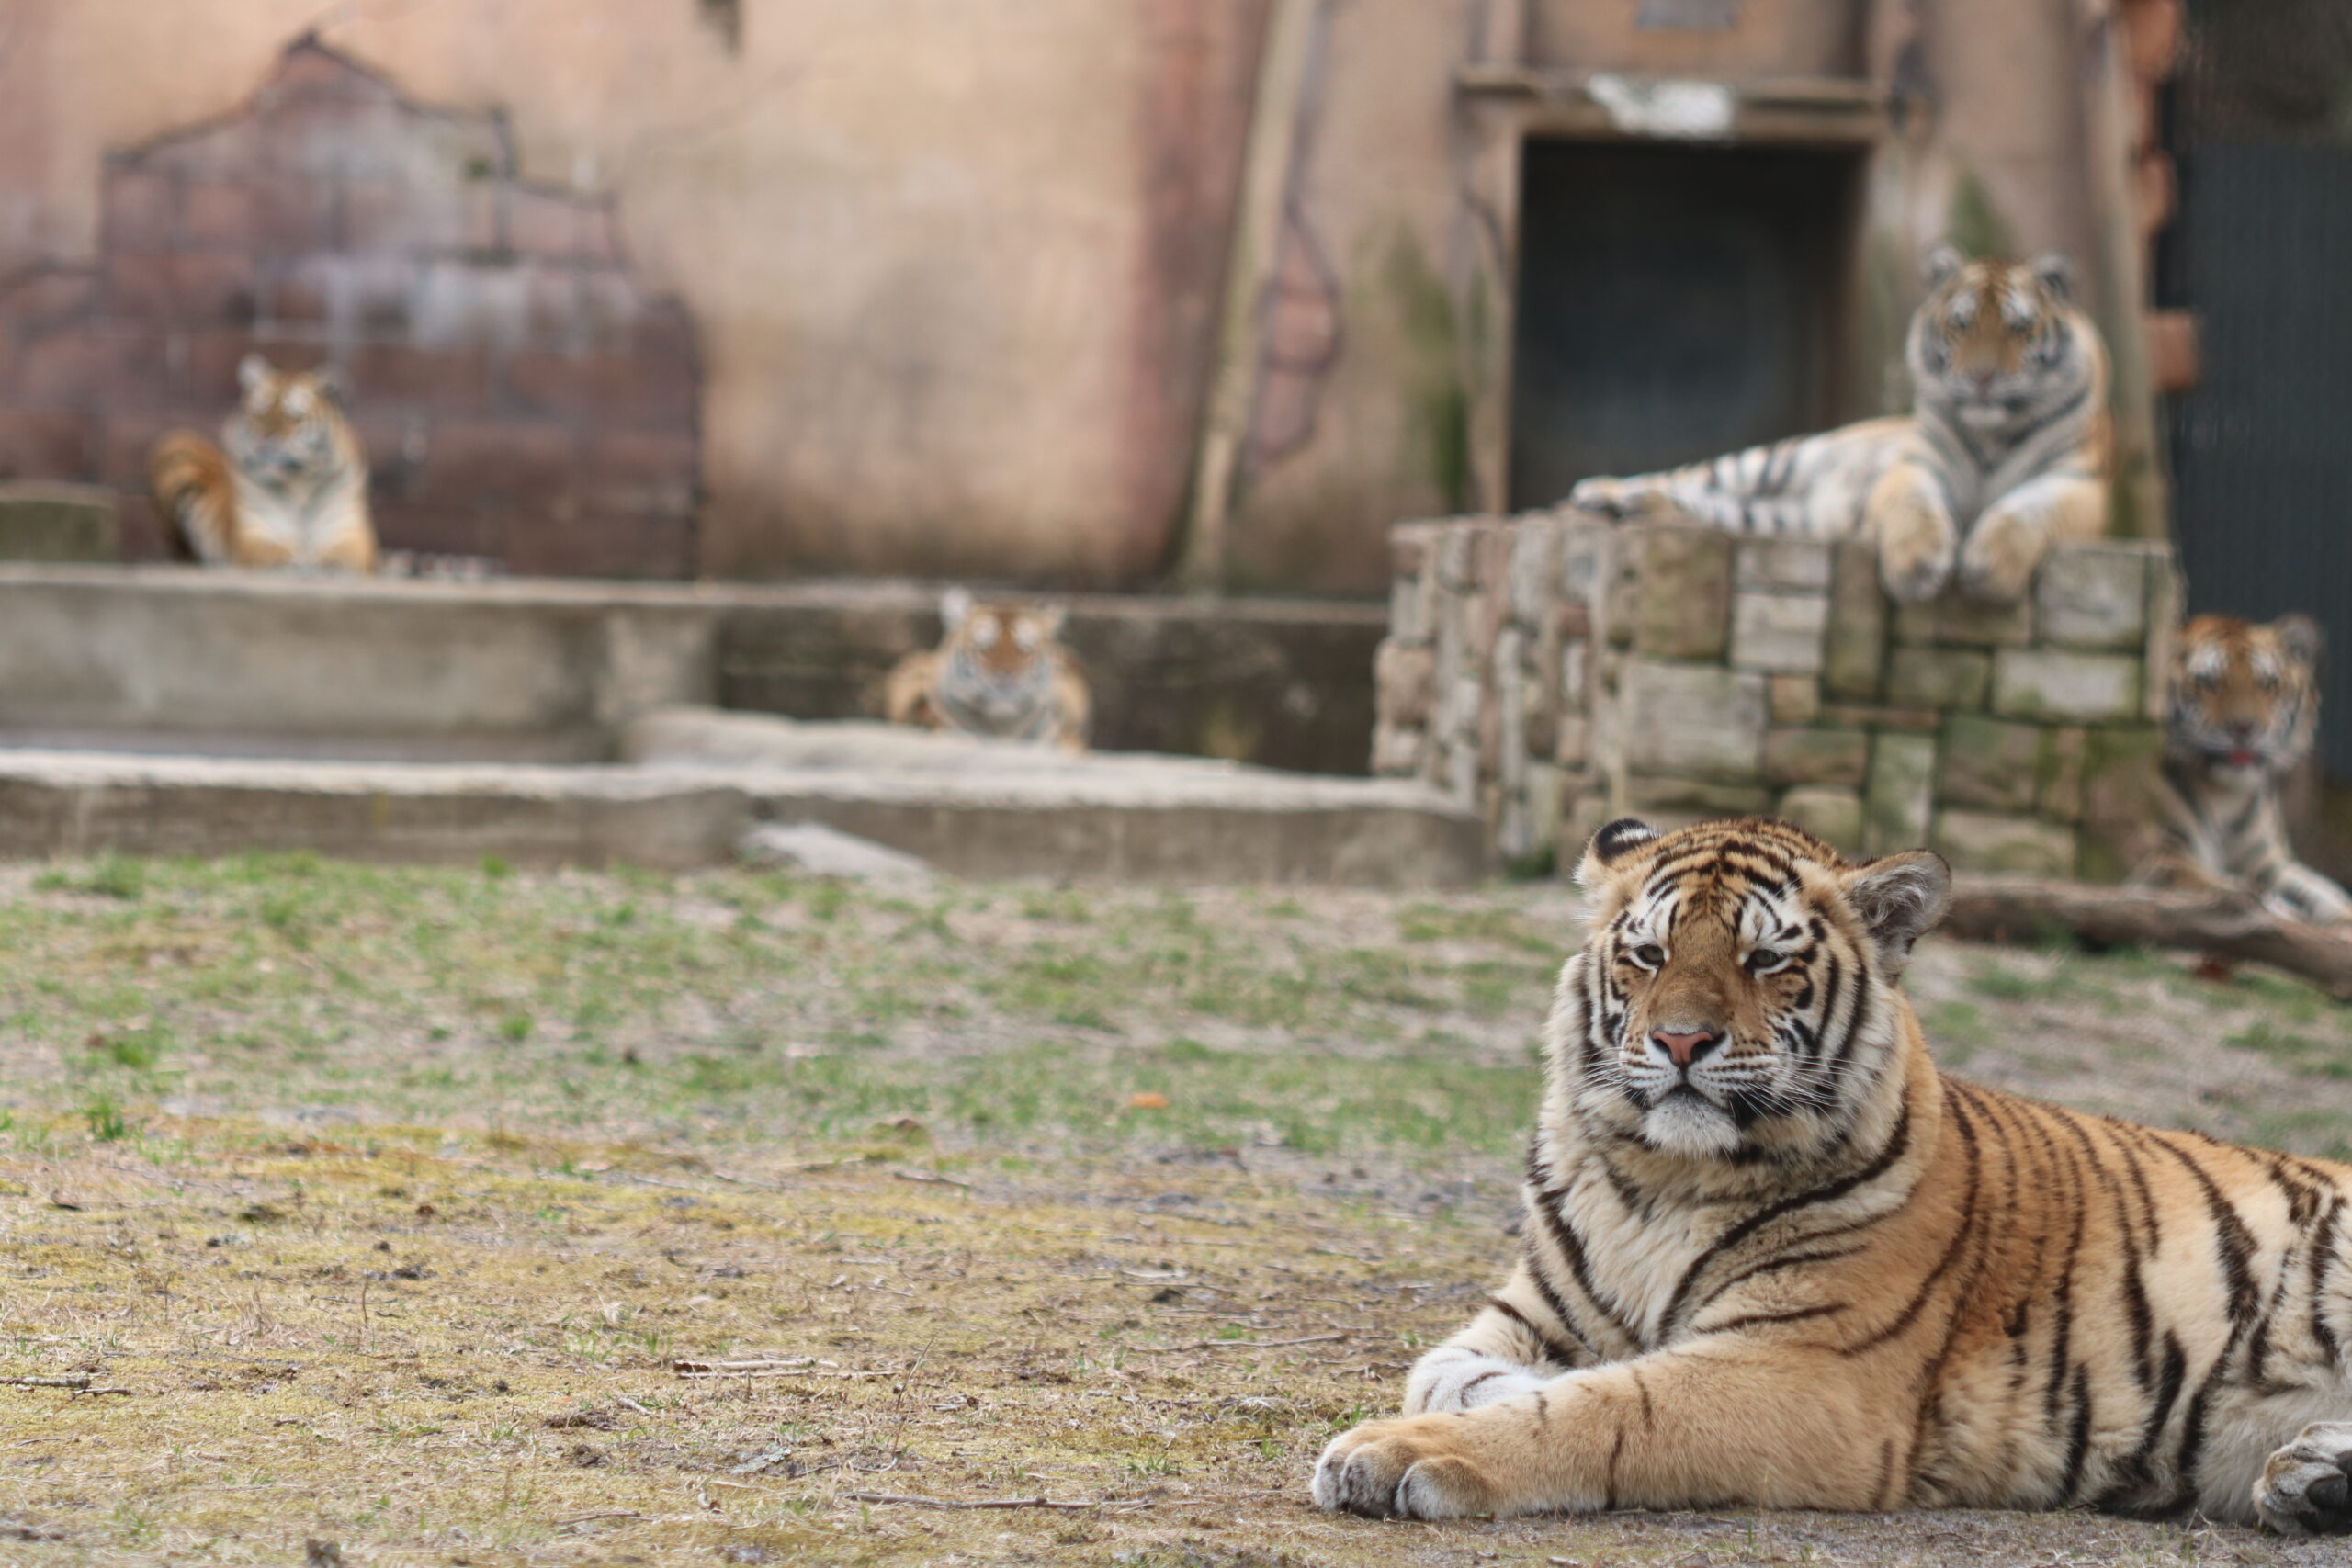 Tiger Cubs at Six Flags Safari in Jackson NJ